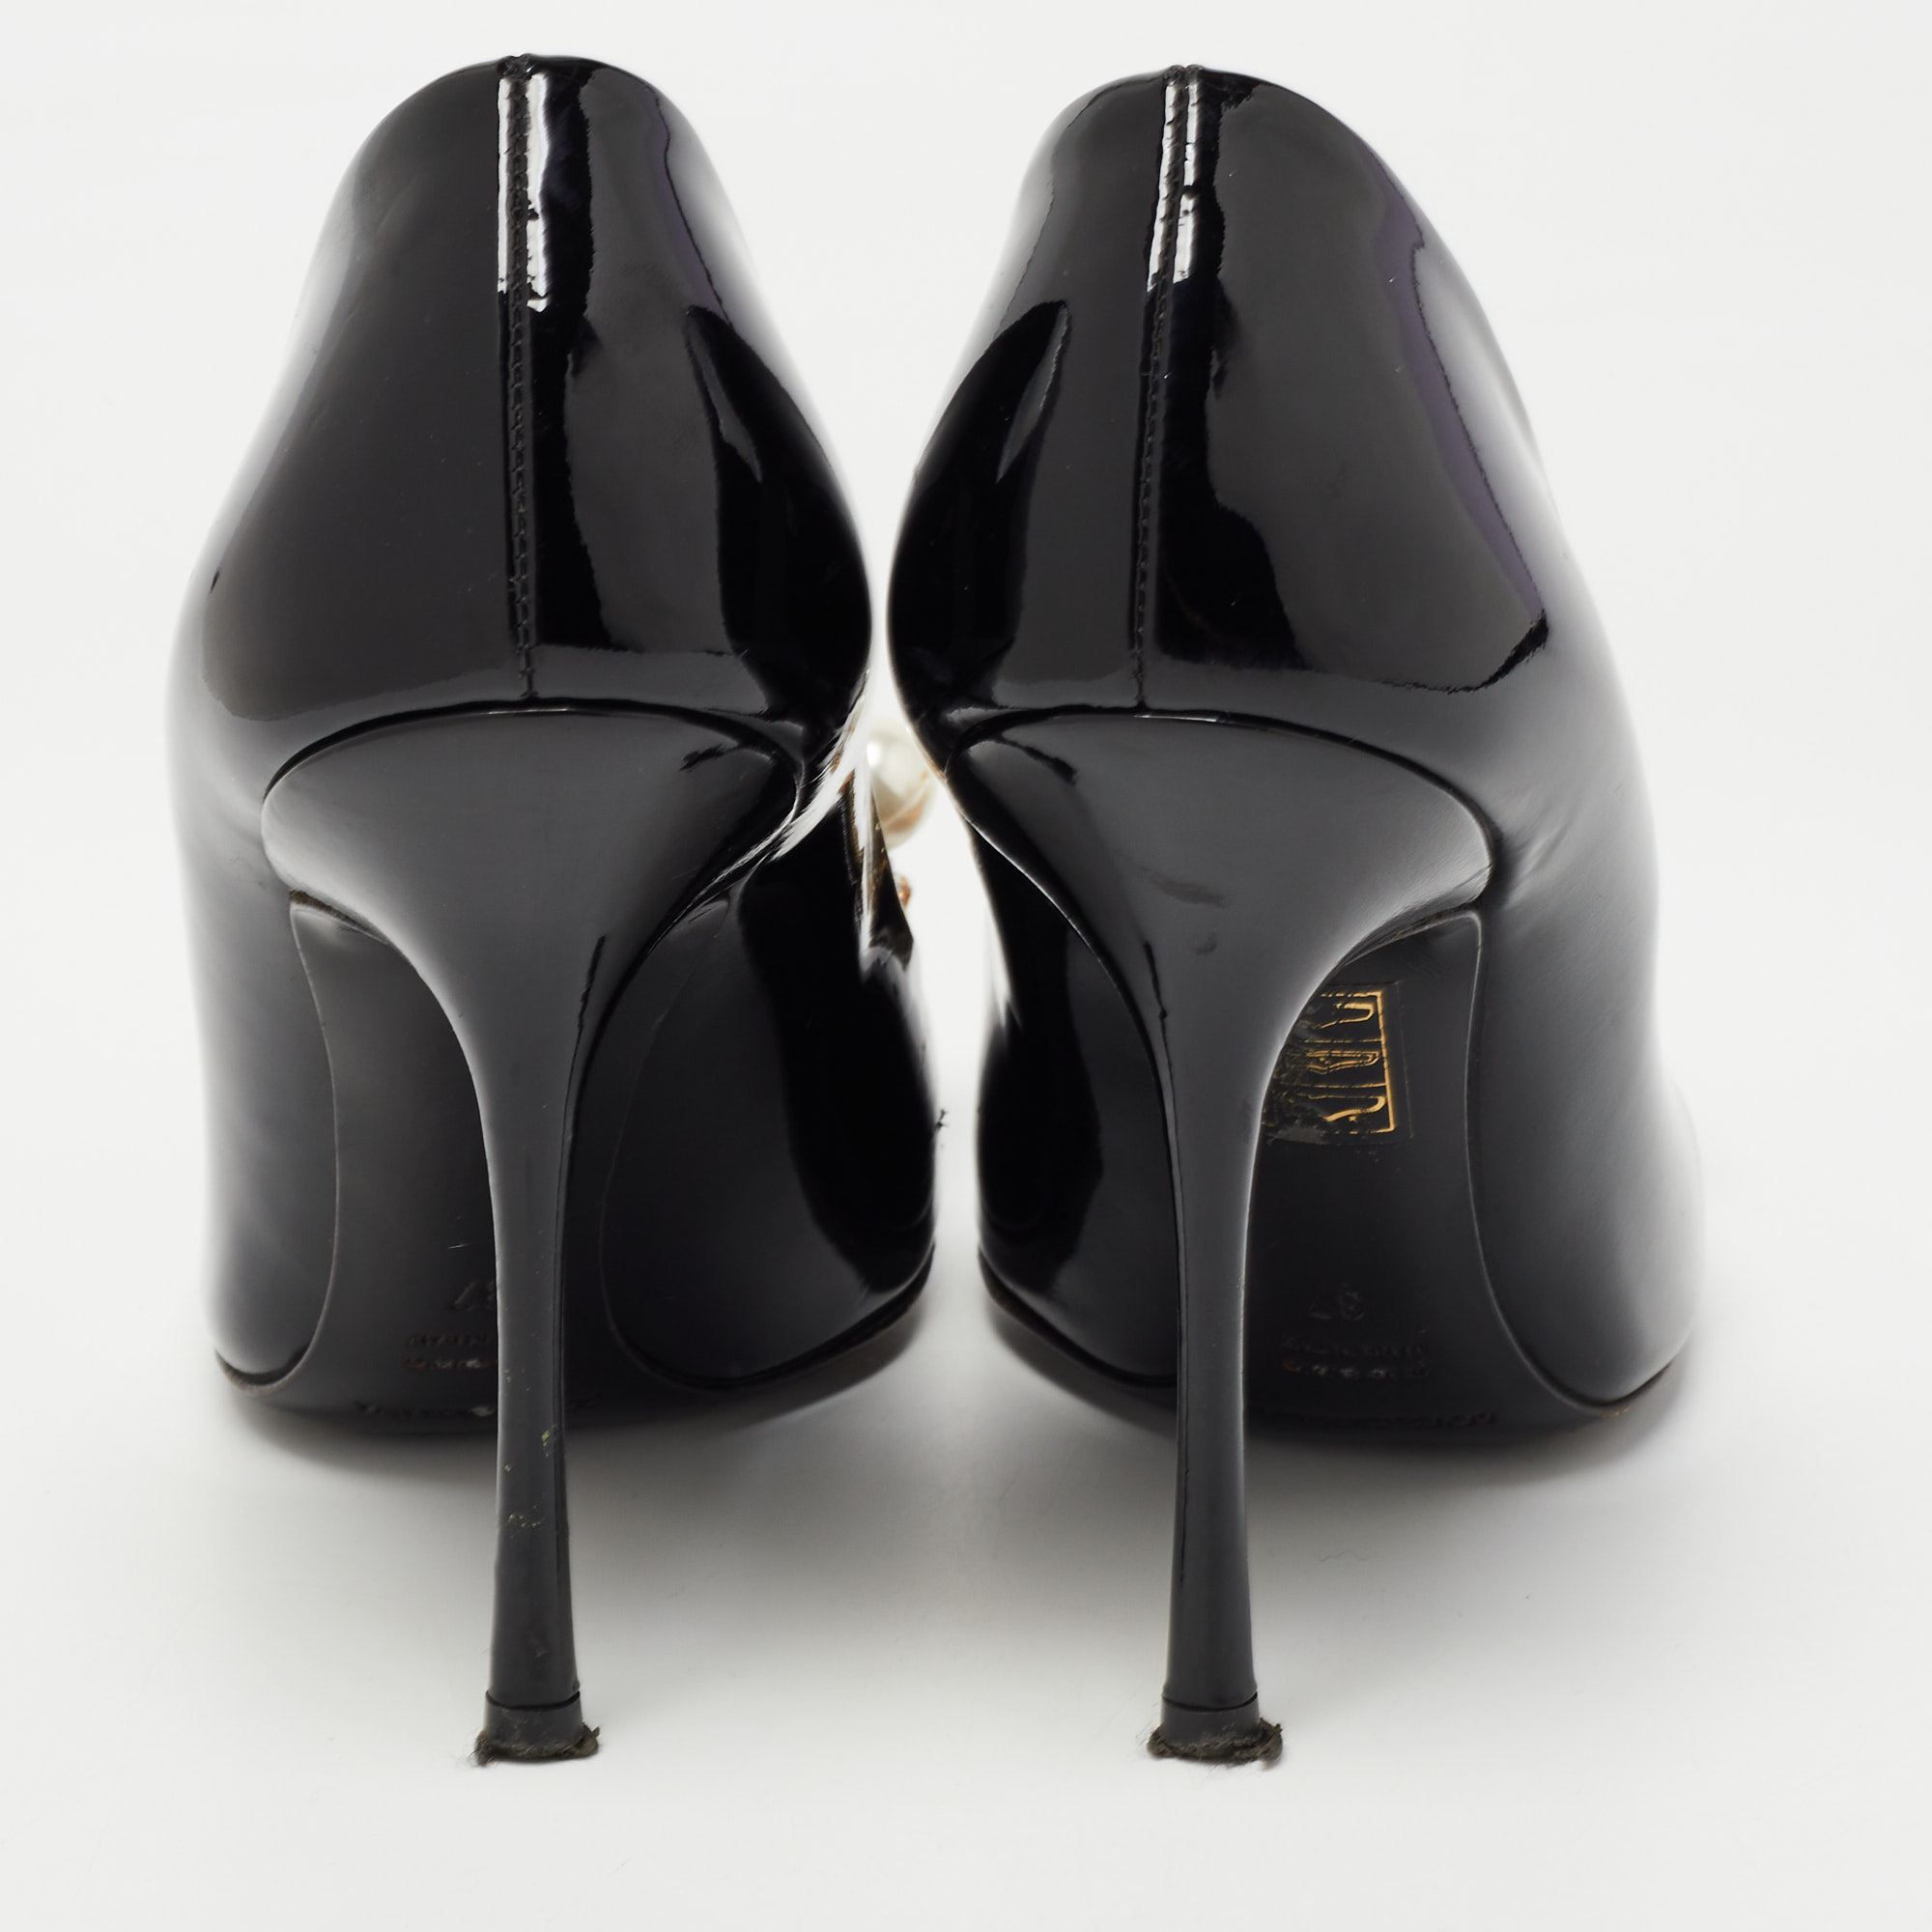 Dolce & Gabbana Black Patent Leather Crystal Embellished Peep Toe Pumps Size 37